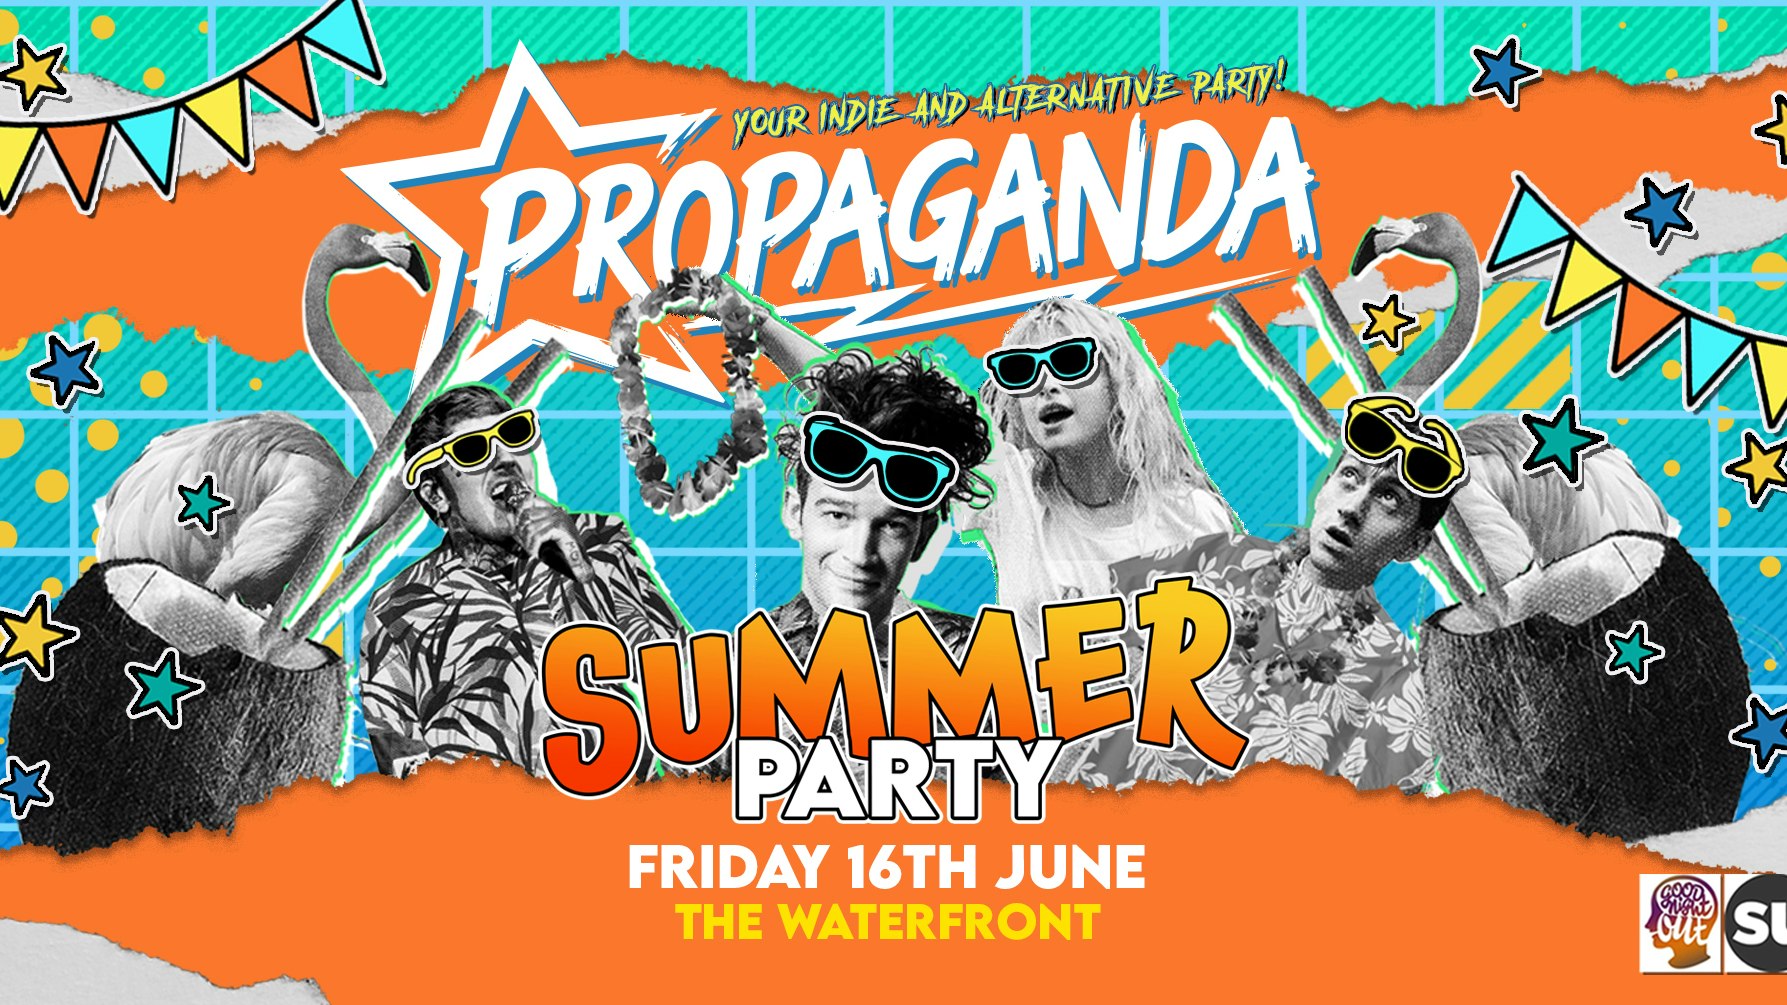 Propaganda Norwich – Summer Party!